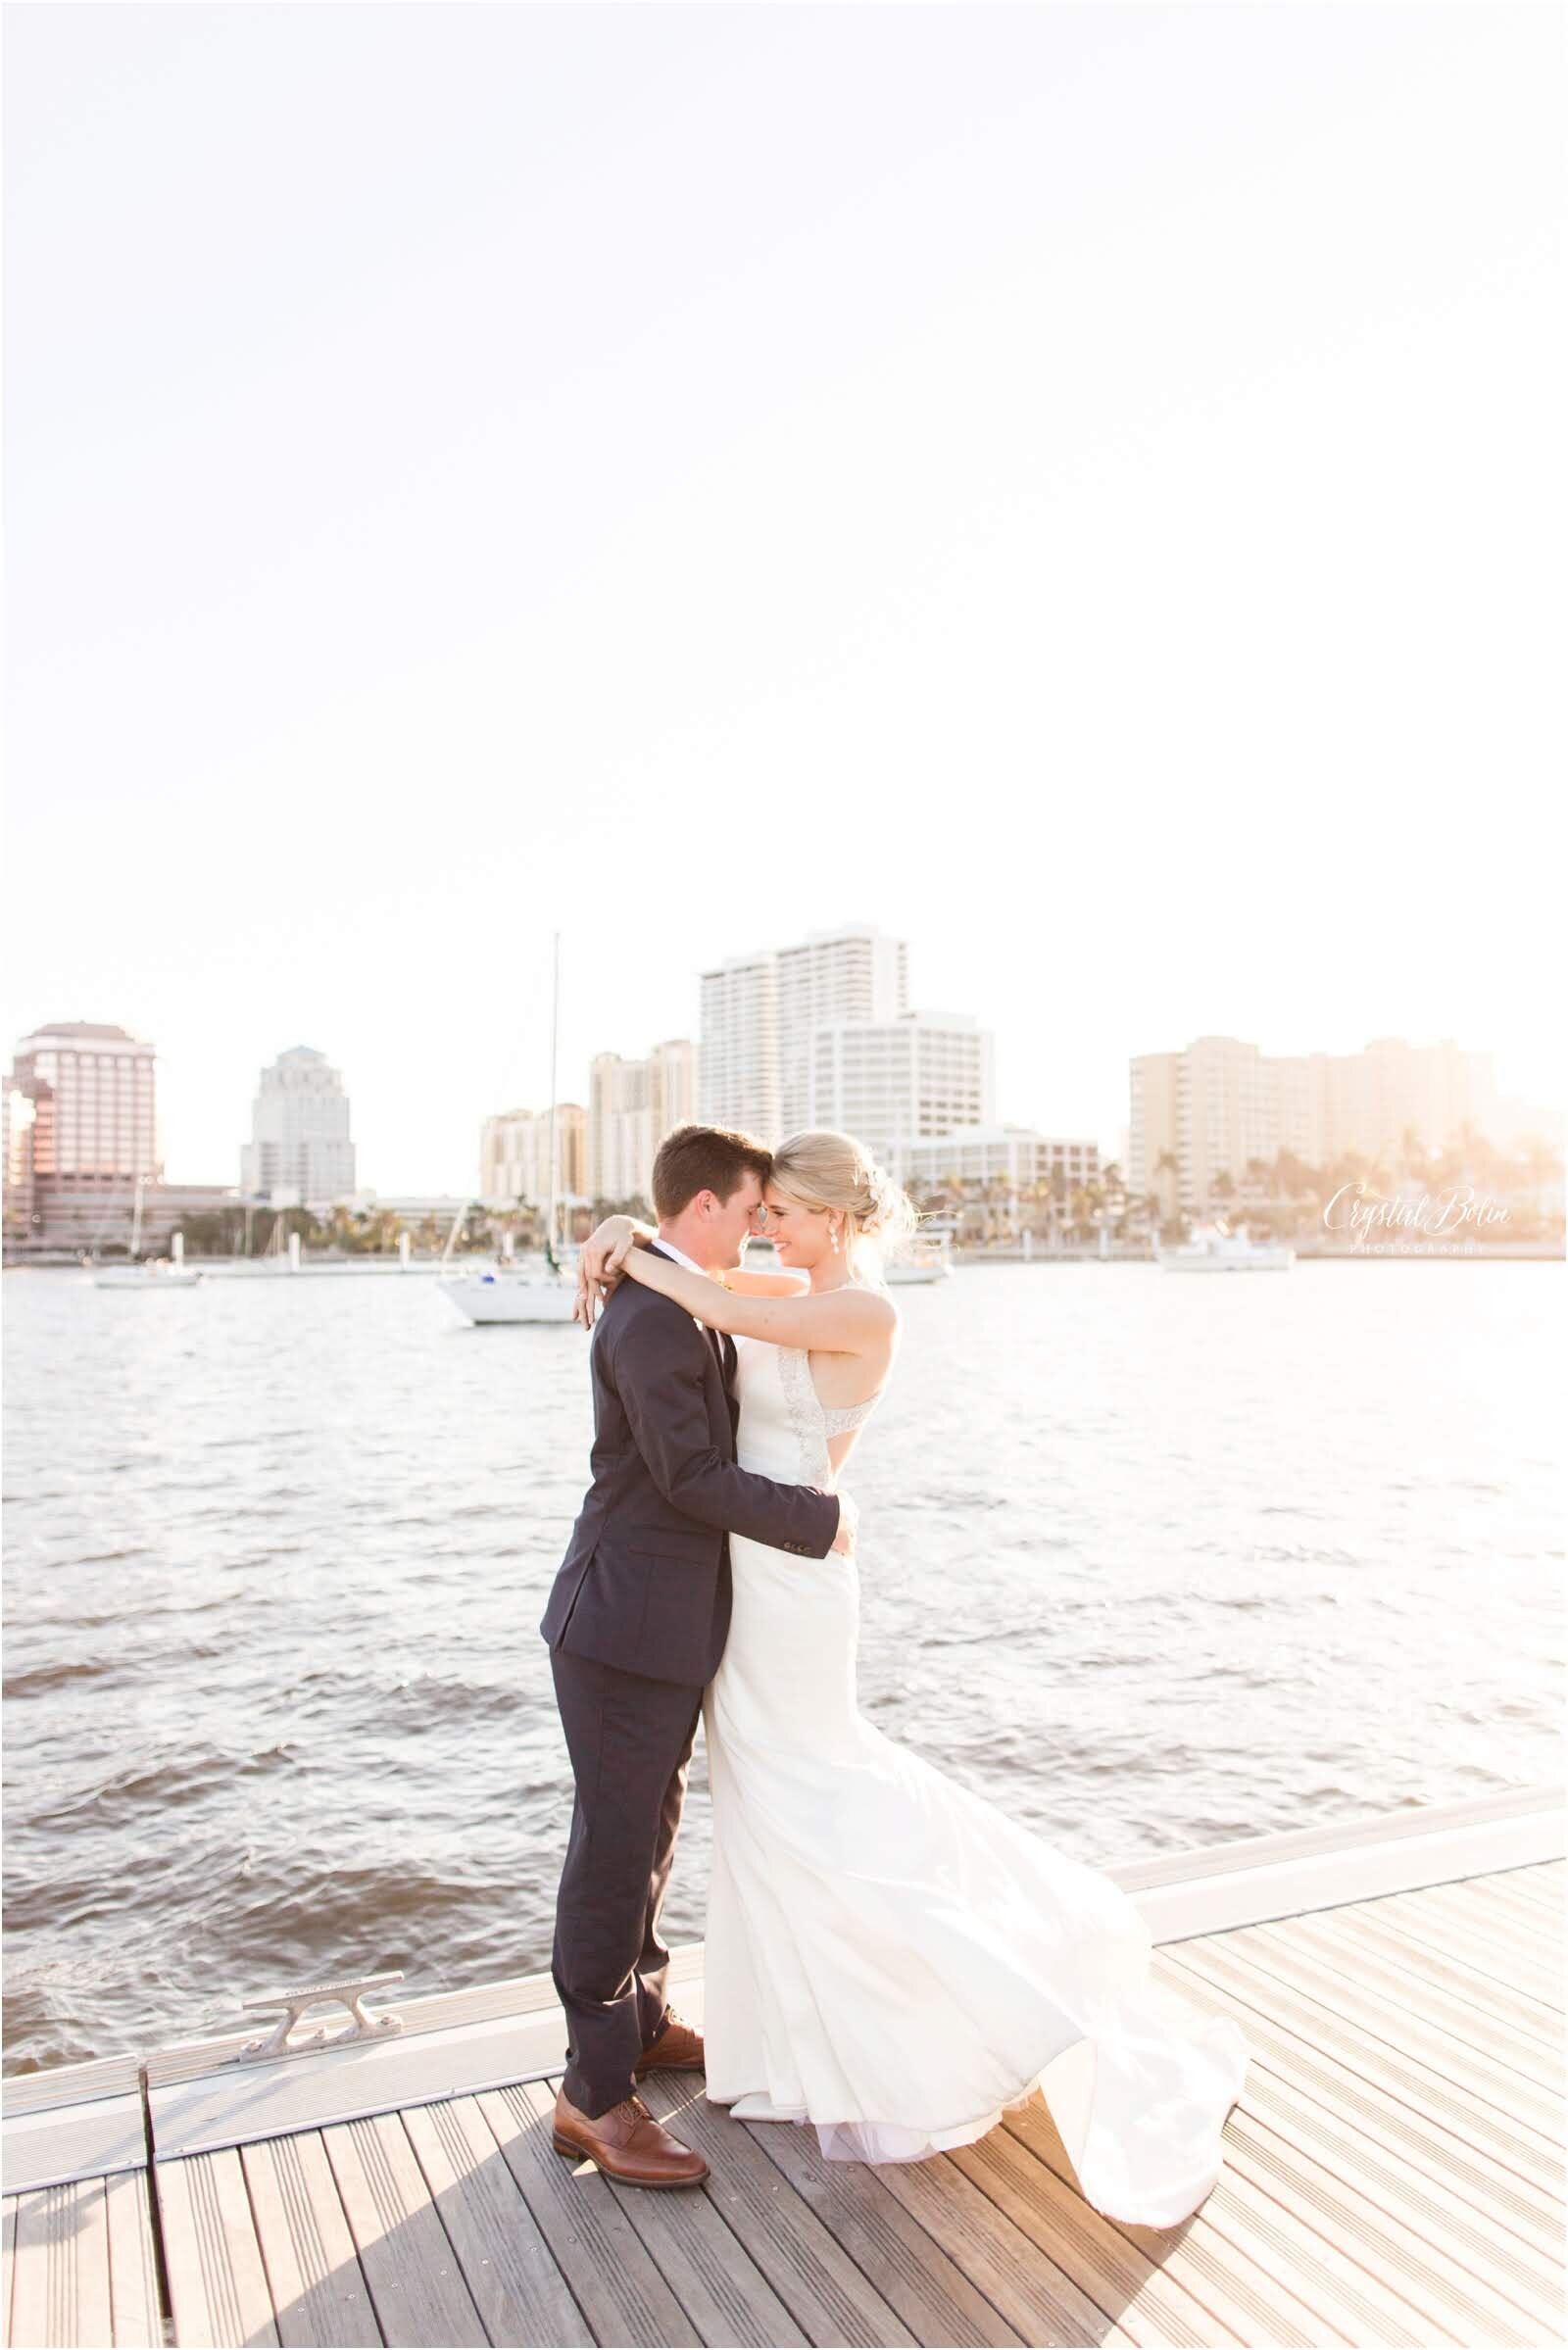 Kirsten & Alex | Tropical Downtown West Palm Beach Wedding | Cry